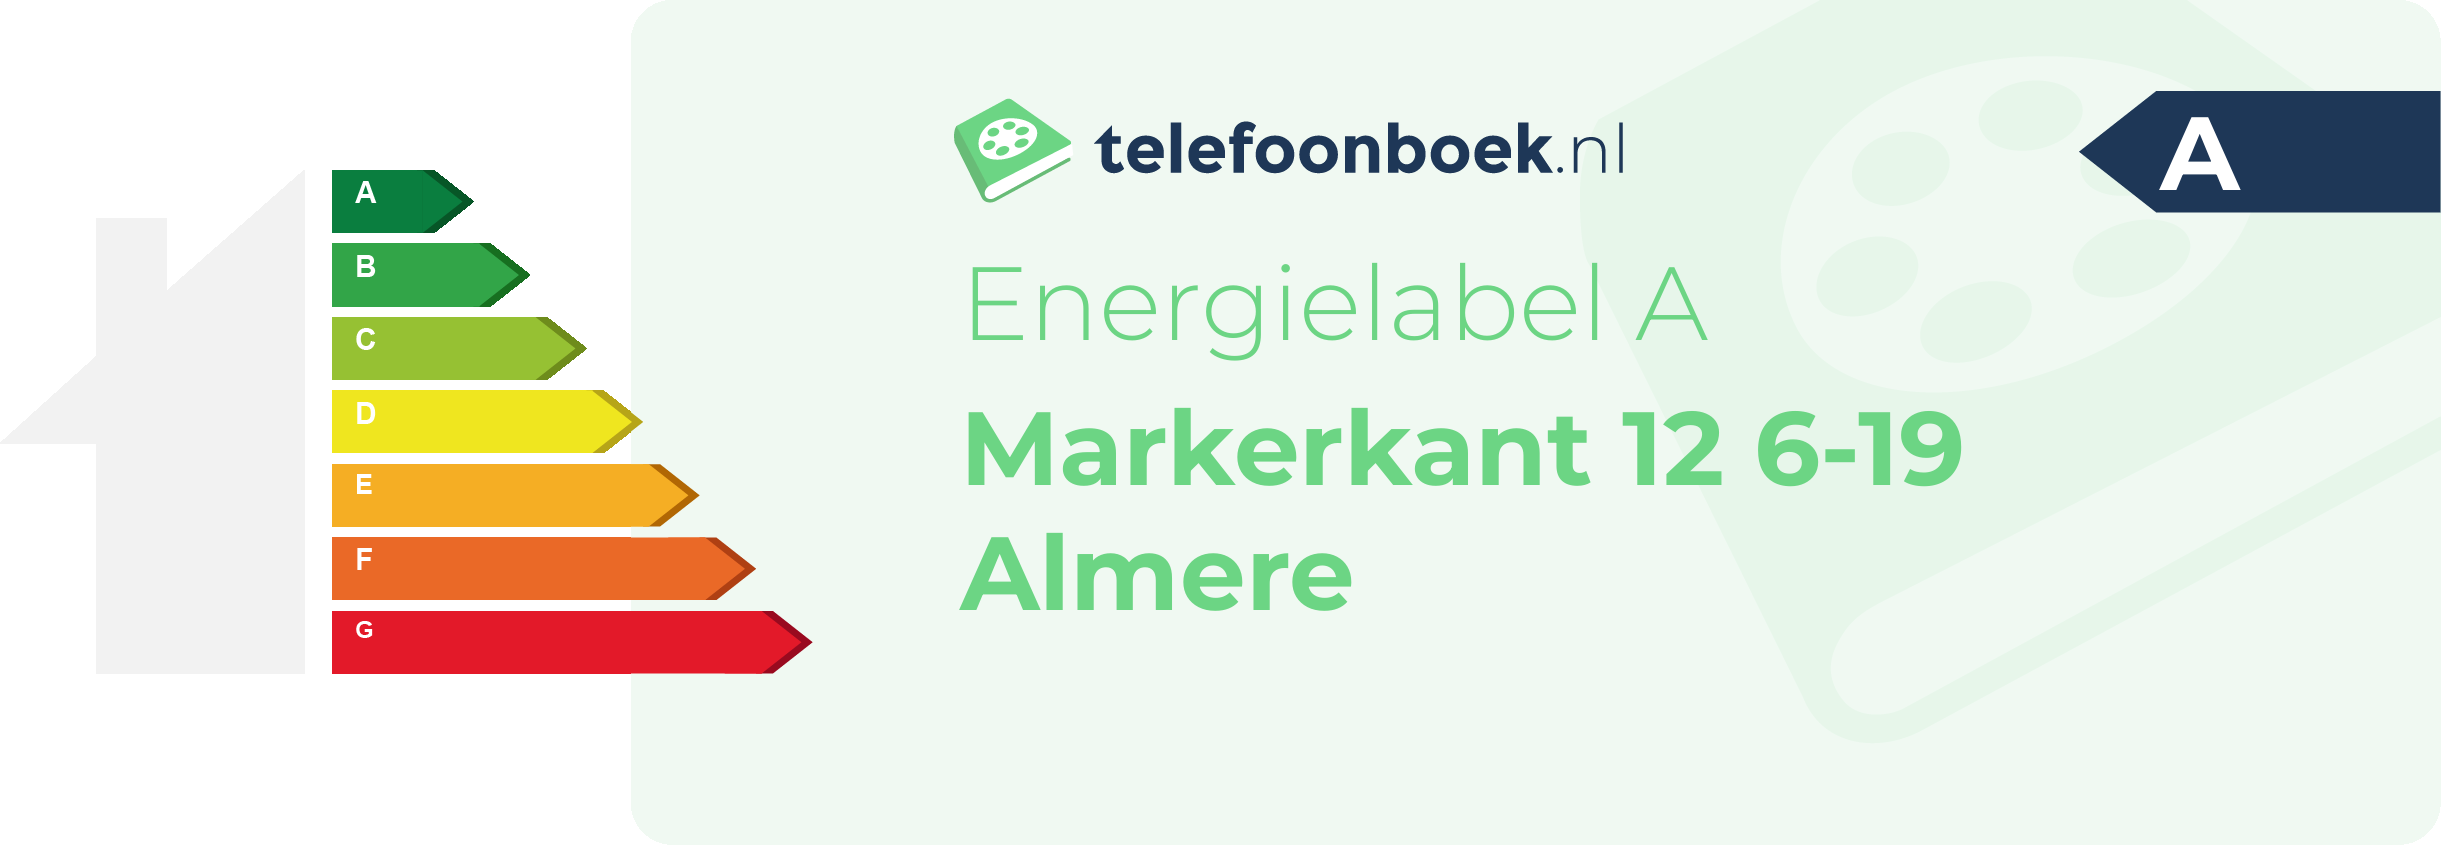 Energielabel Markerkant 12 6-19 Almere